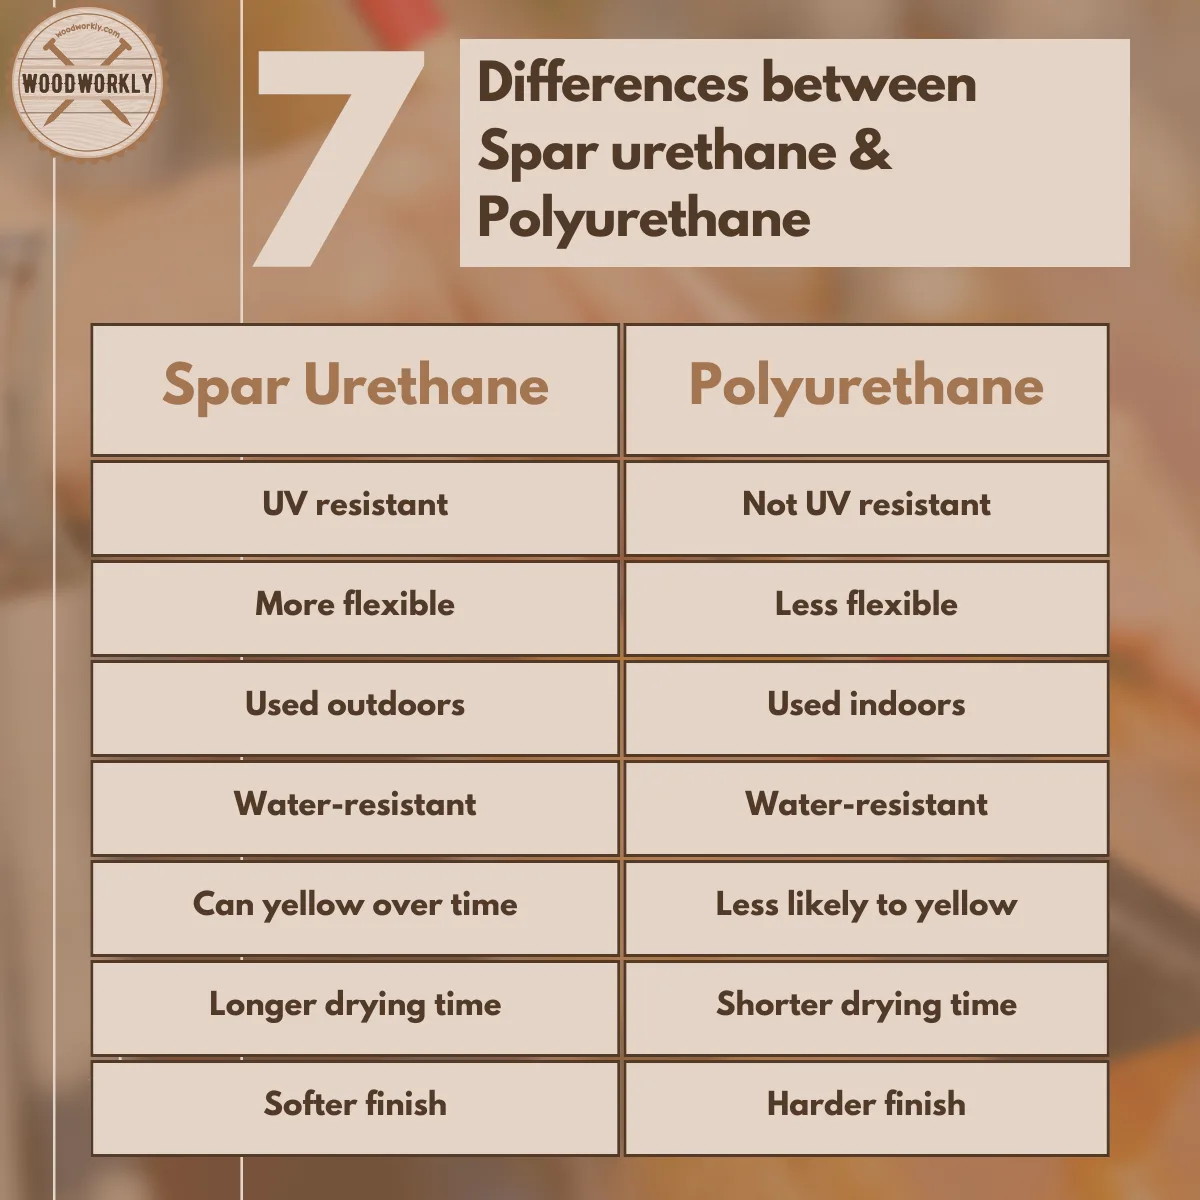 Differences between Spar urethane & Polyurethane